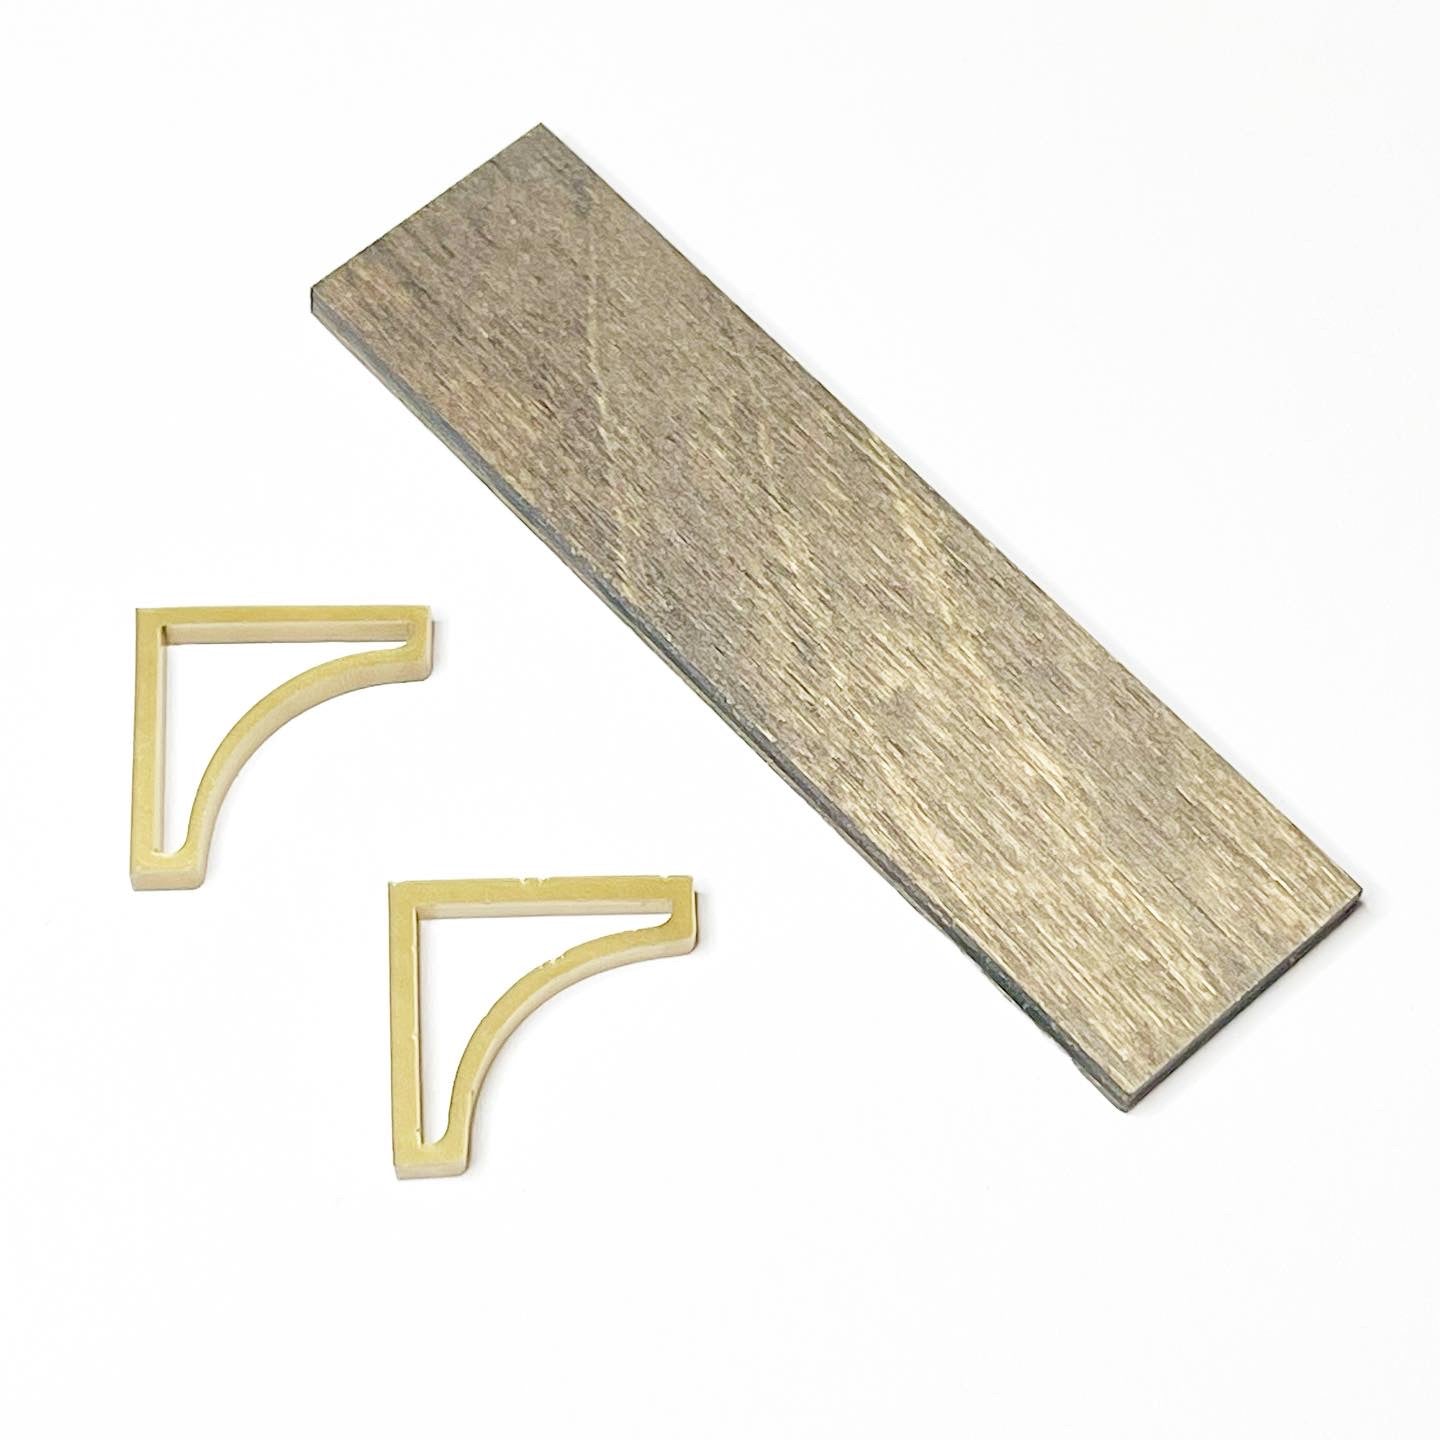 Standard Gold Brackets with Optional Shelf